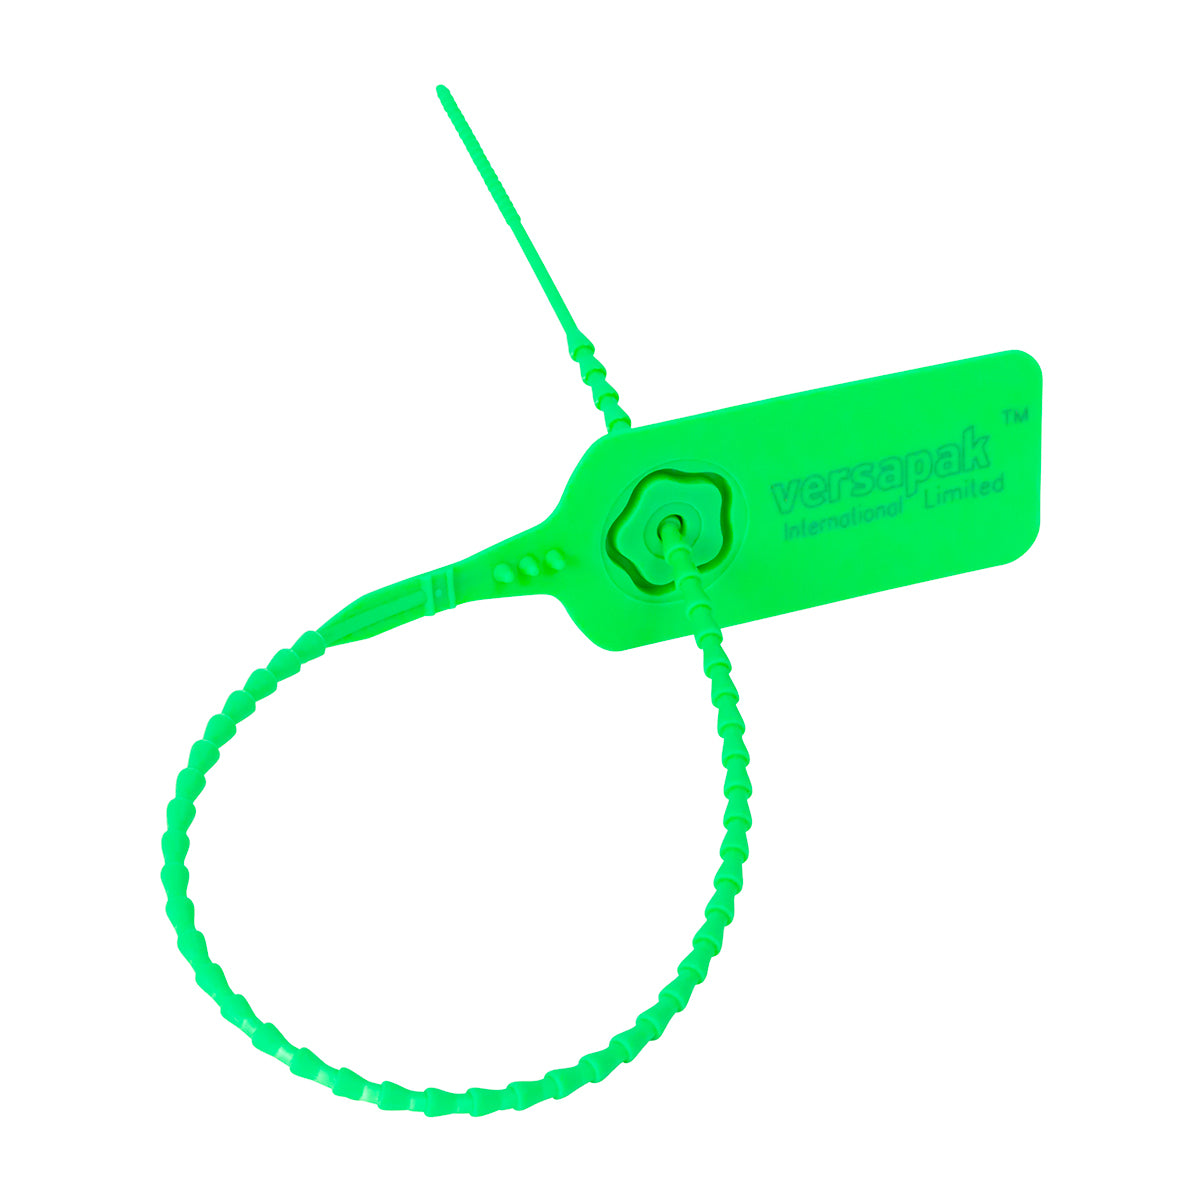 VersaTite - Barbed Strap, Metal Jaw Security Seal (Green)